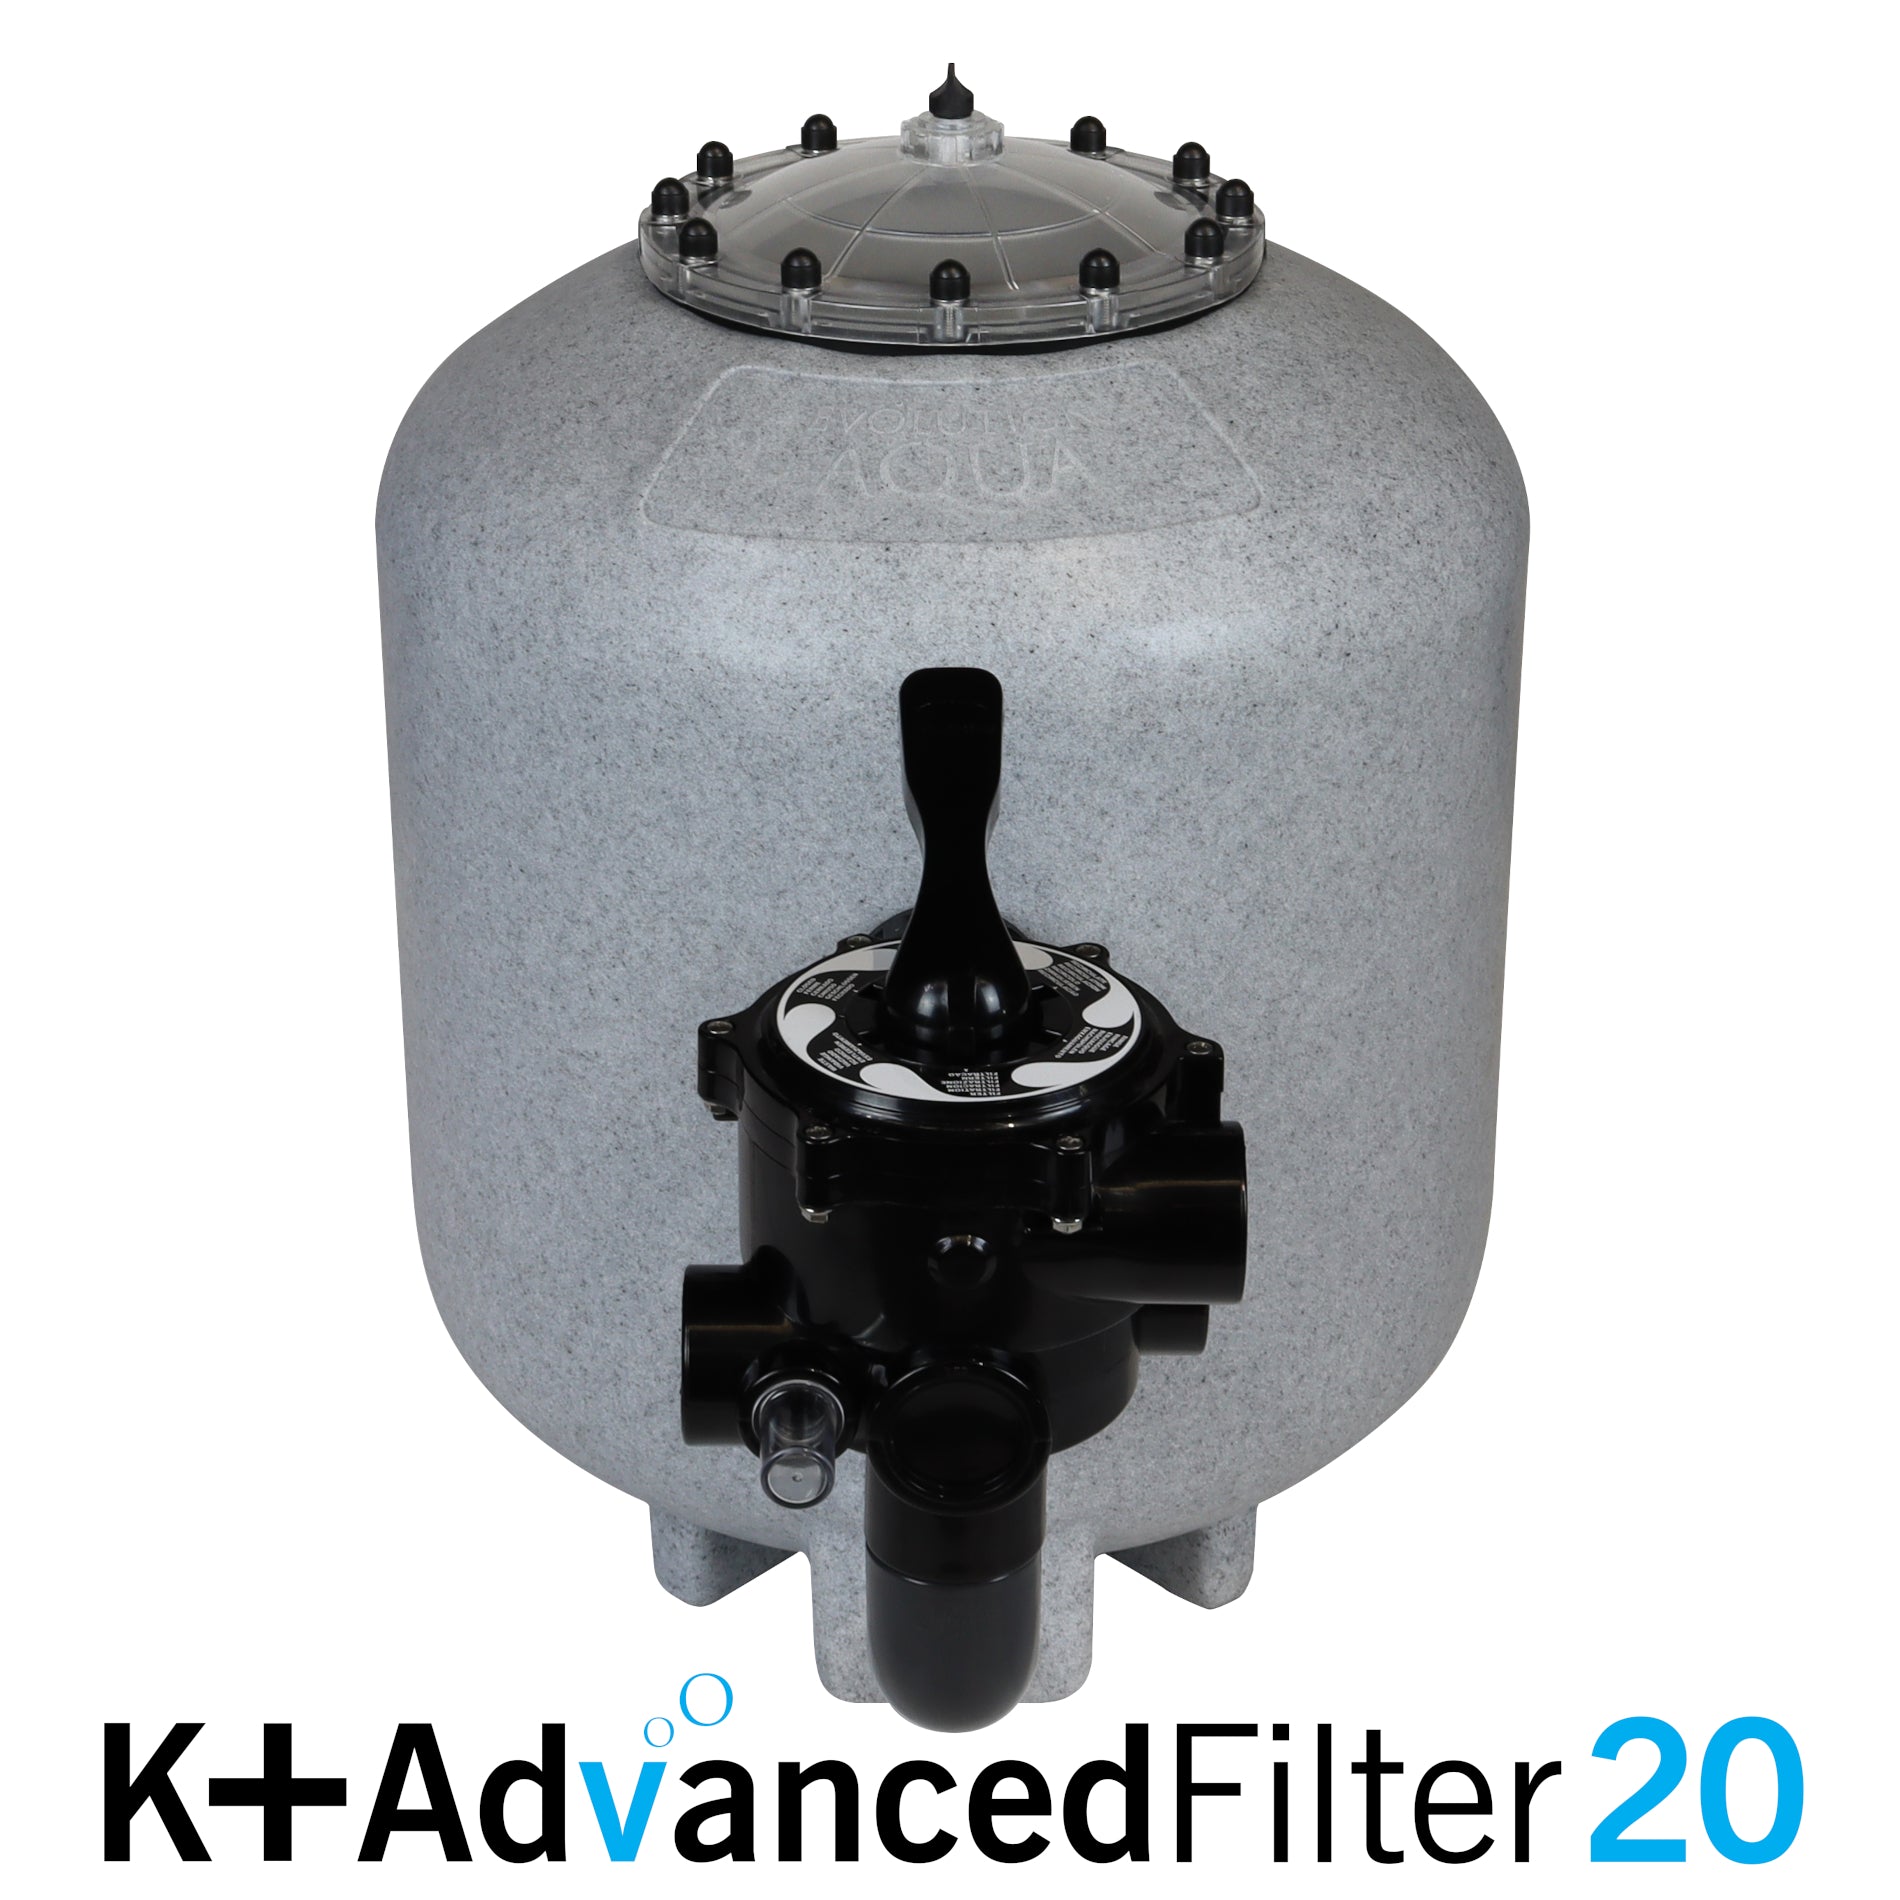 Evolution Aqua Pressure Pond K+ Advanced Filter 20